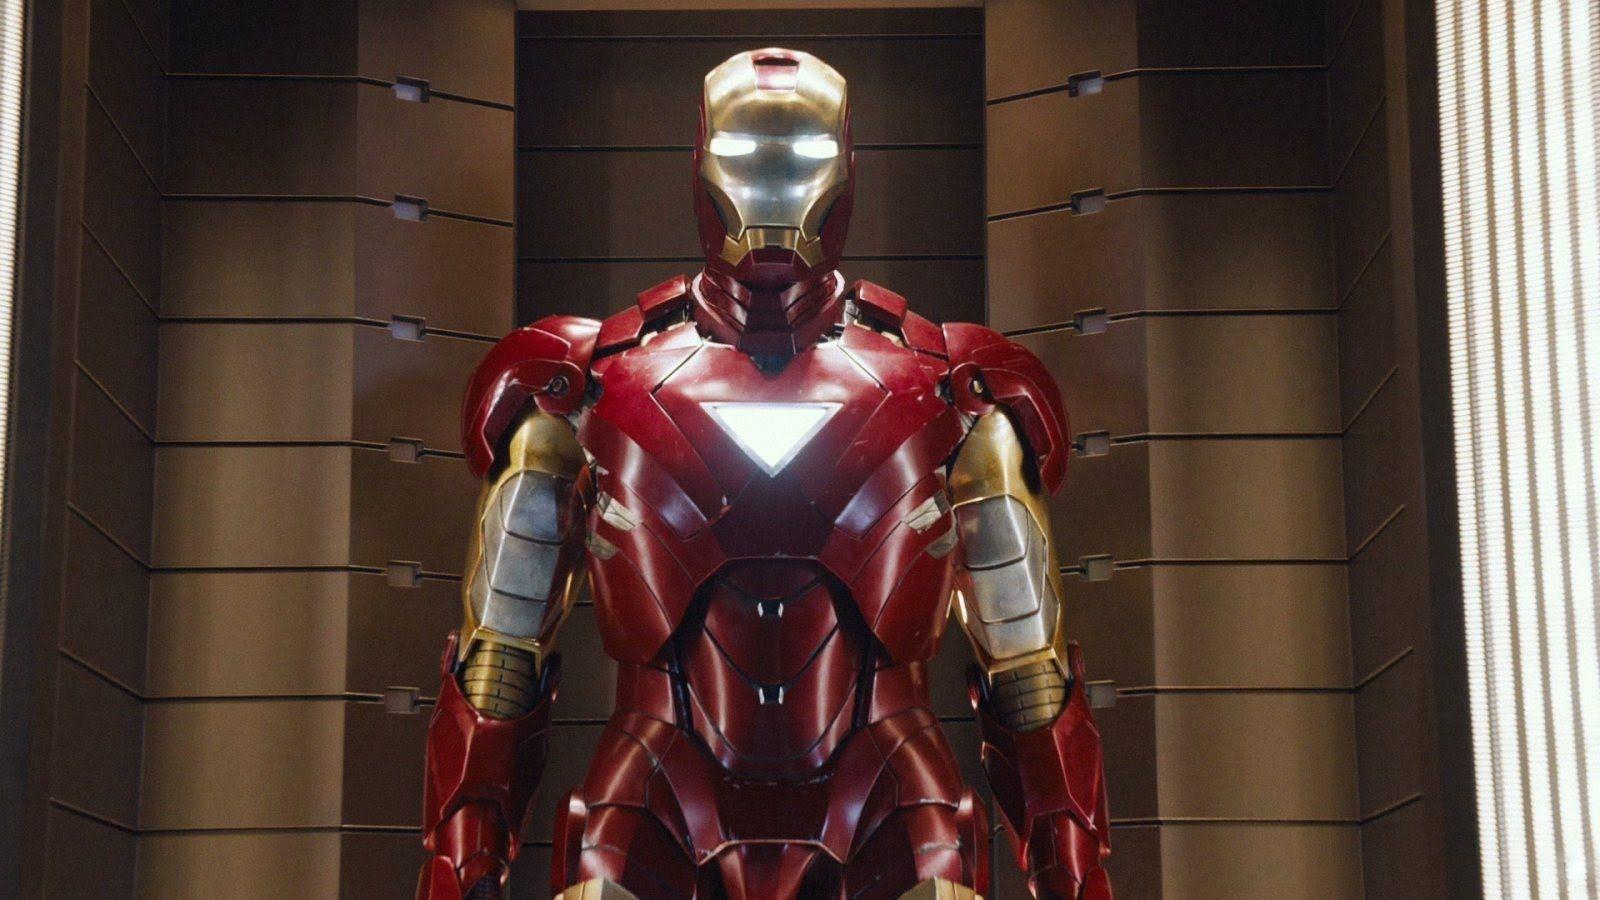 Avengers: Iron Man saved New York [HD]